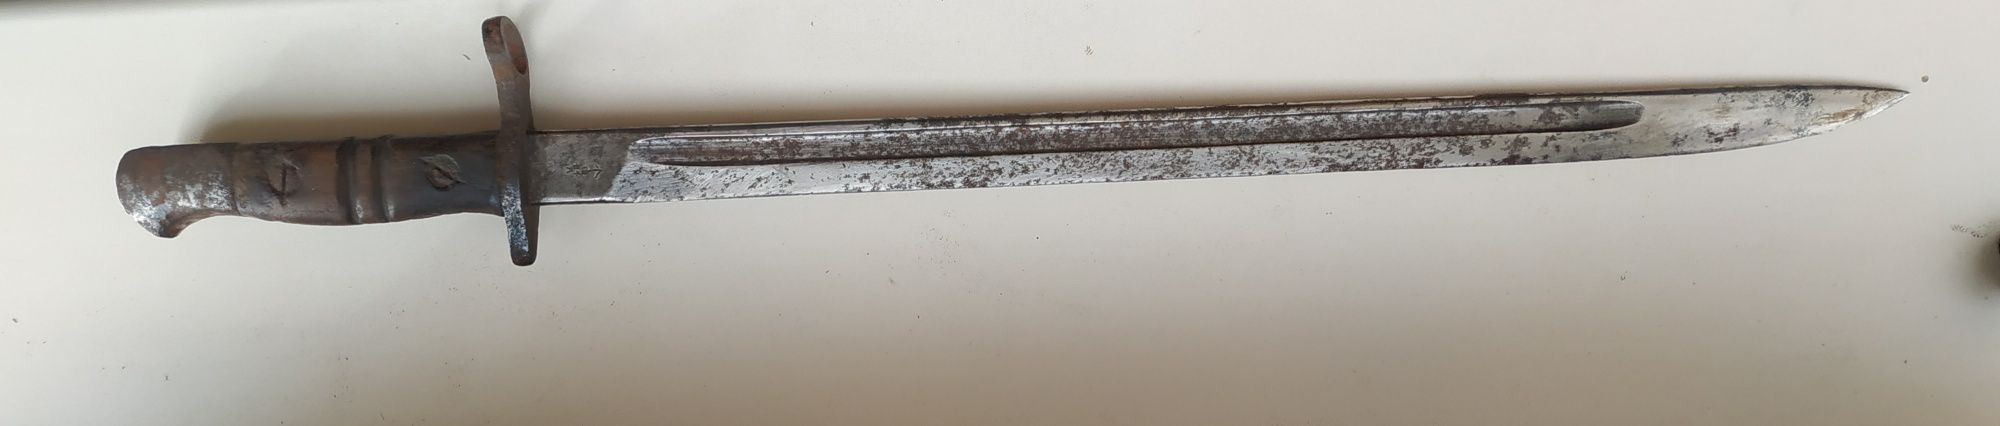 штык-нож образца 1913 года